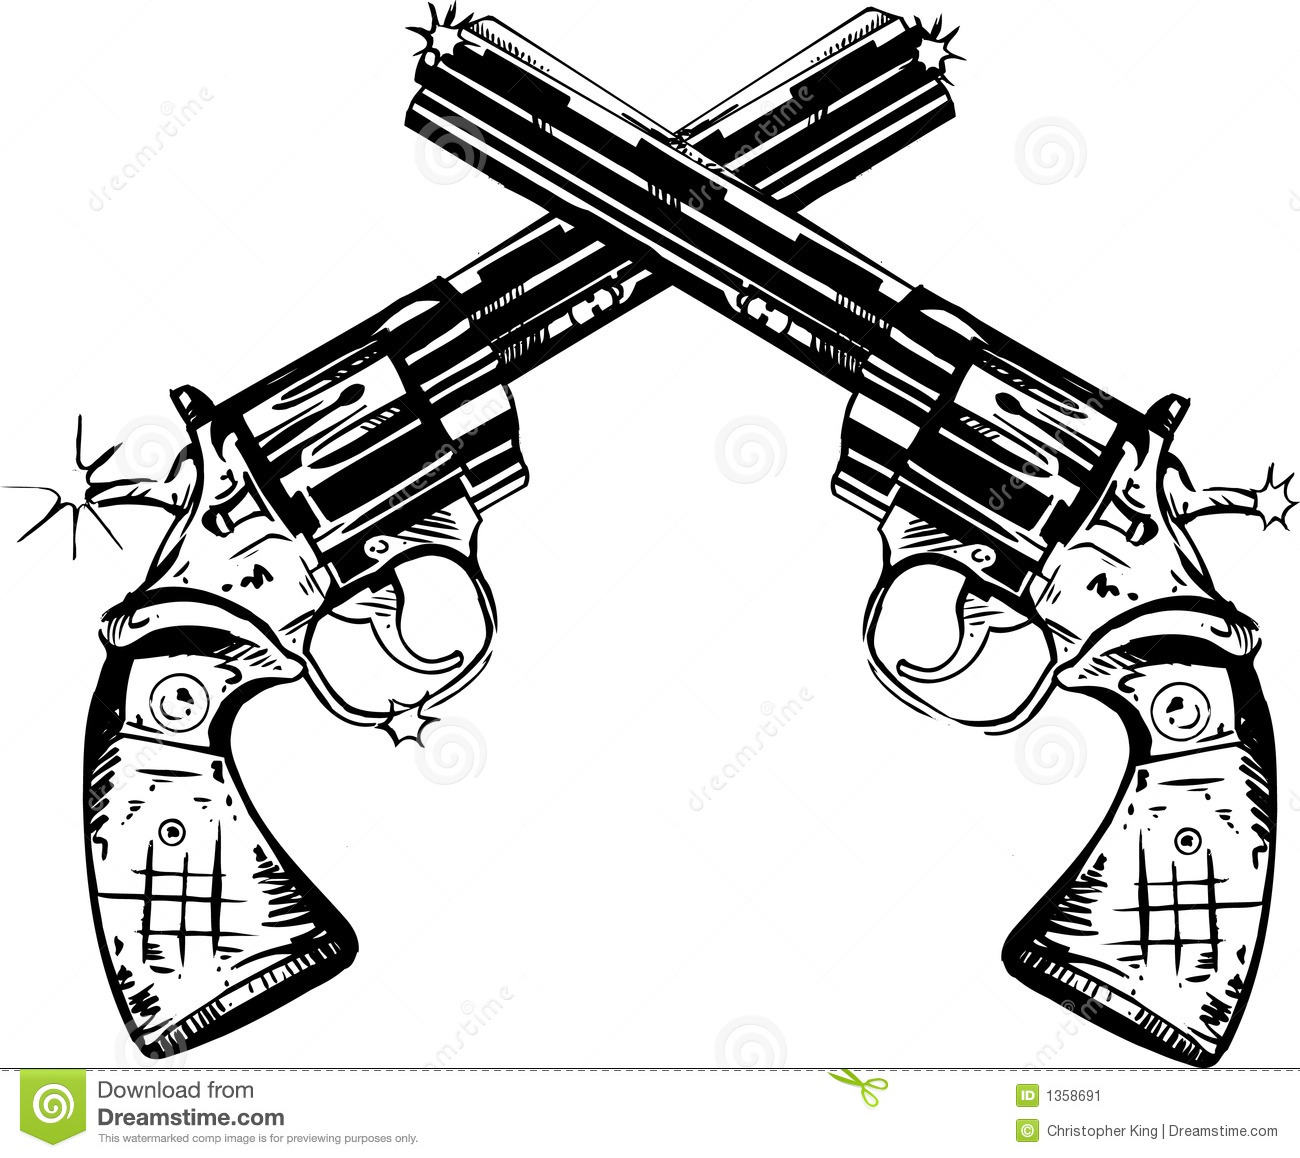 Pen And Ink Illustration Of Two Magnum Pistols Mr No Pr No 5 4532 36